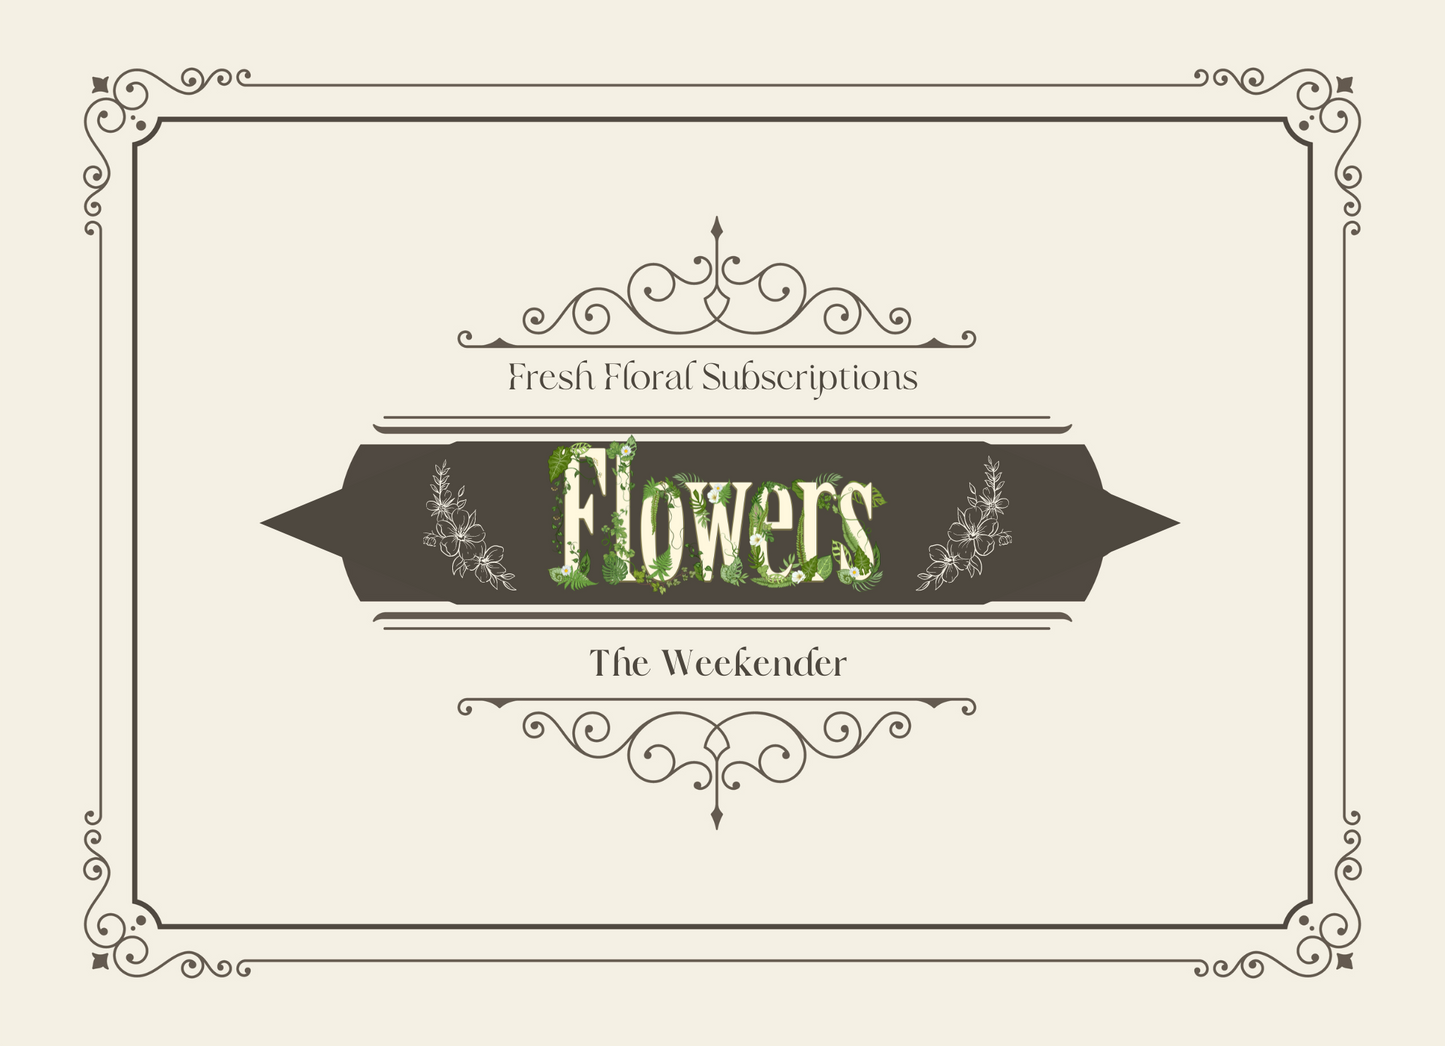 The Weekender Flowers | Subscriptions